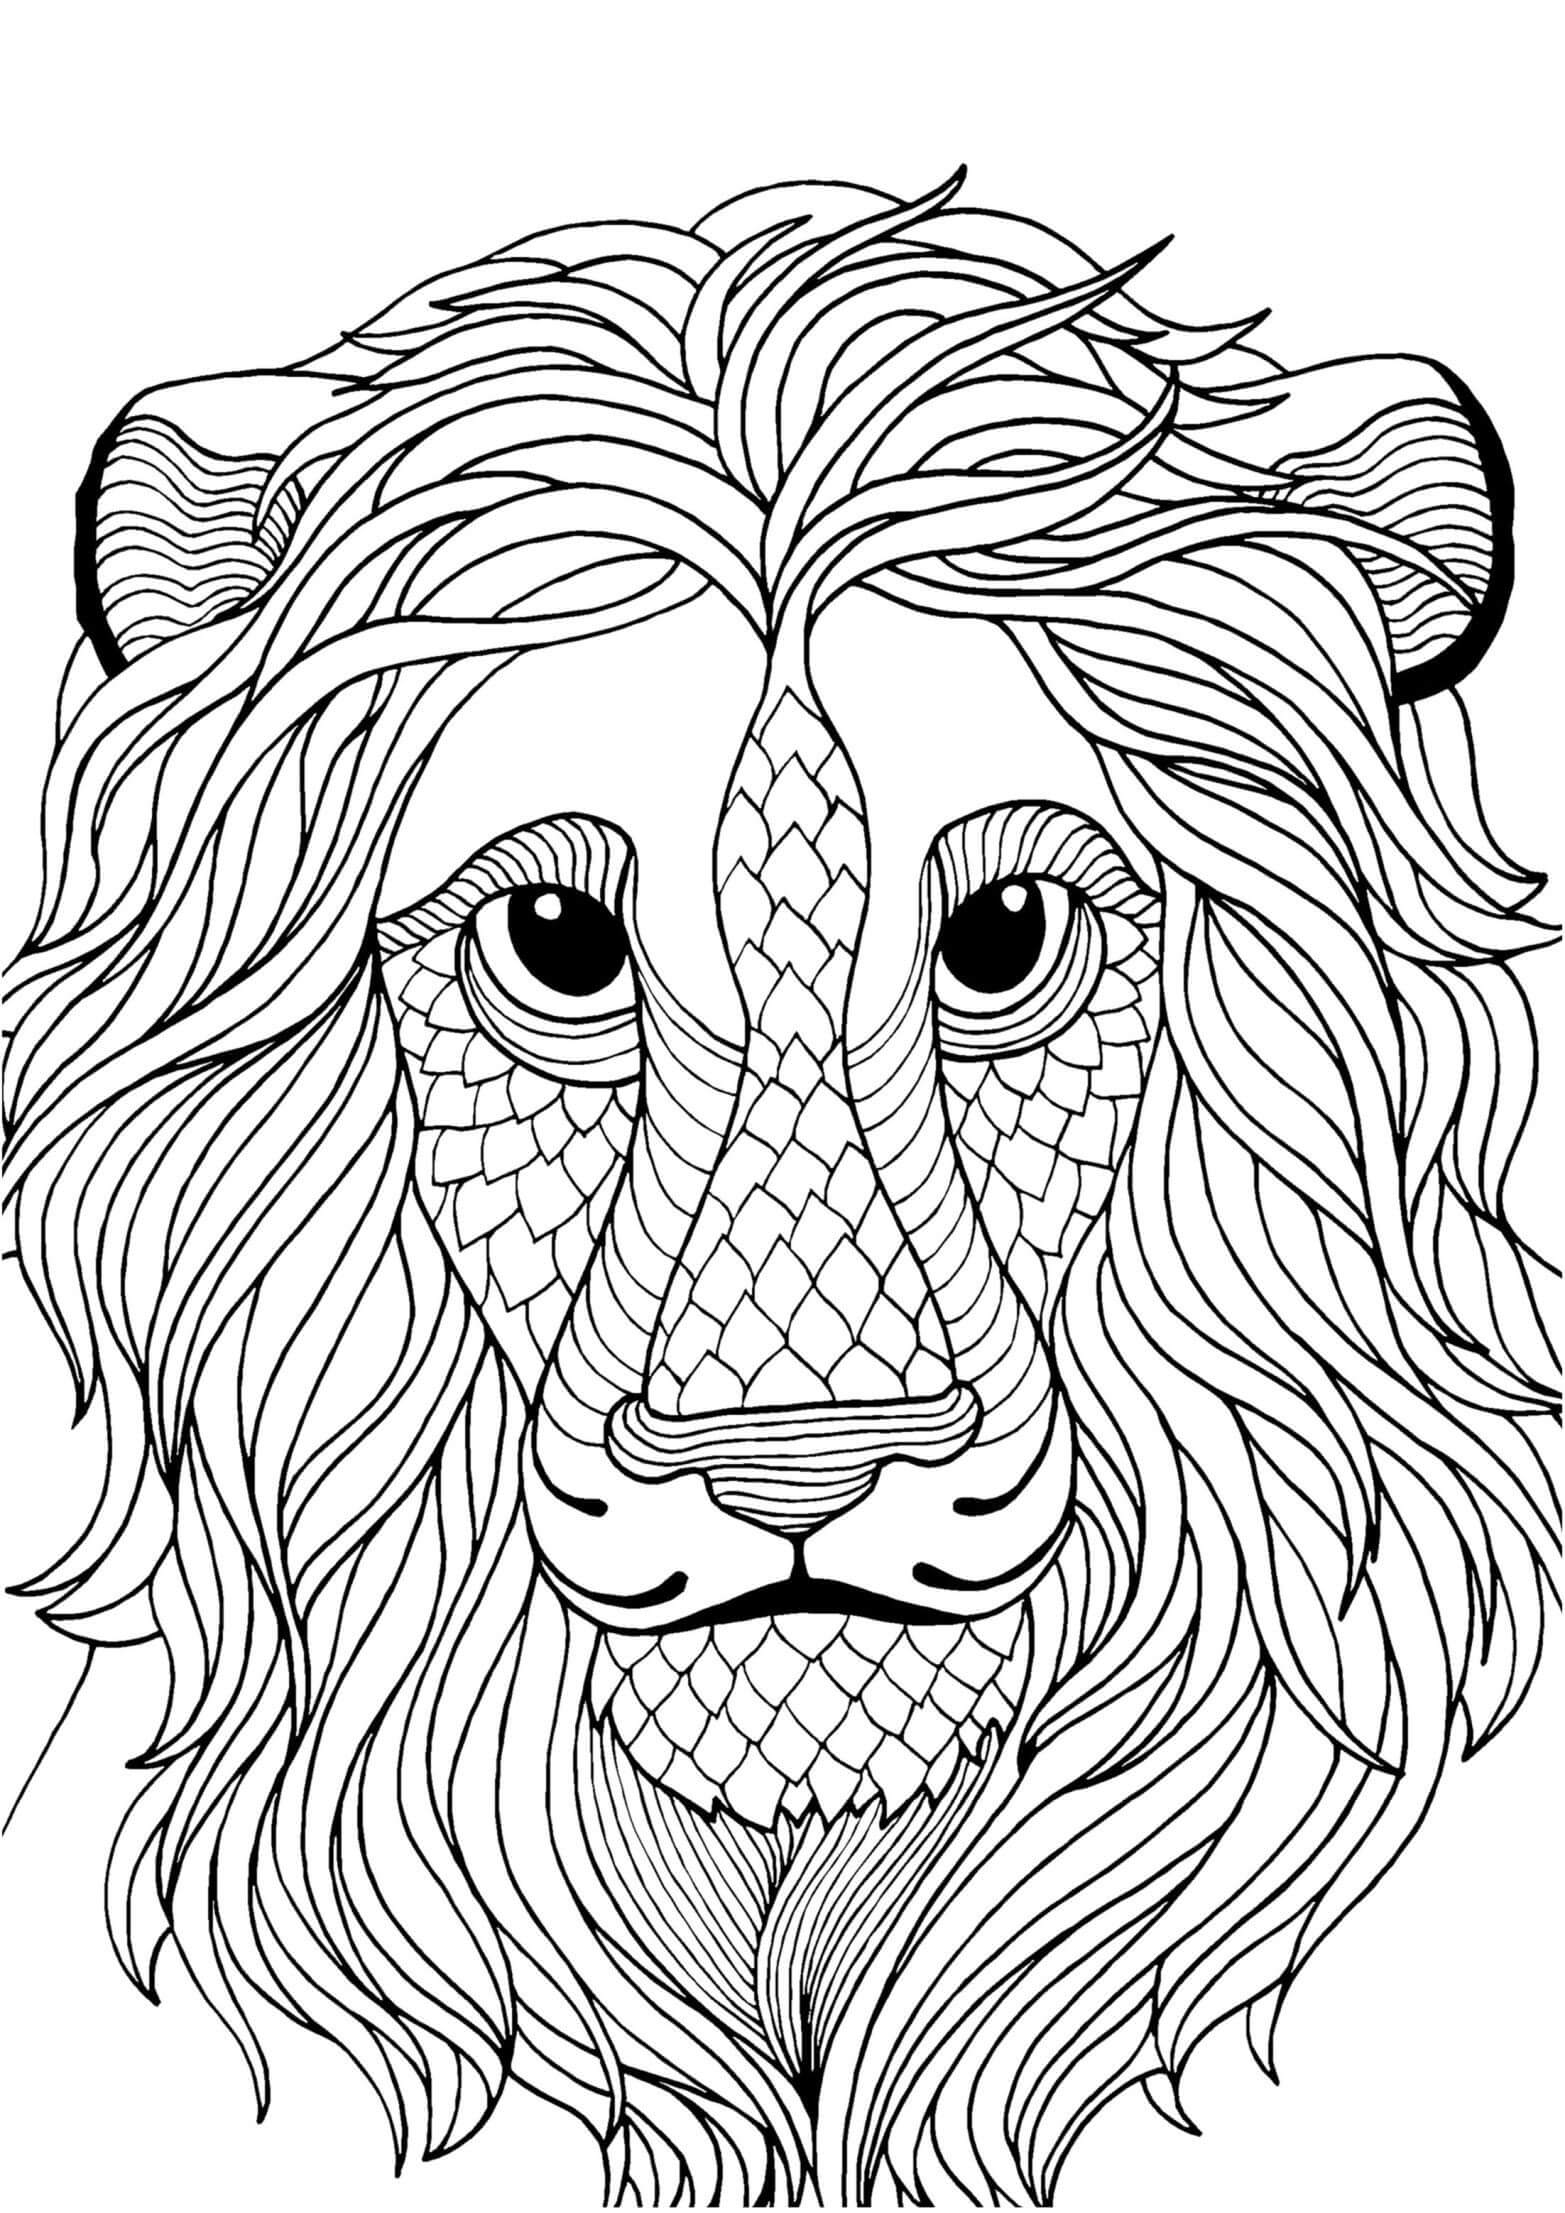 Mandala Lion Coloring Page - Sheet 10 Mandalas